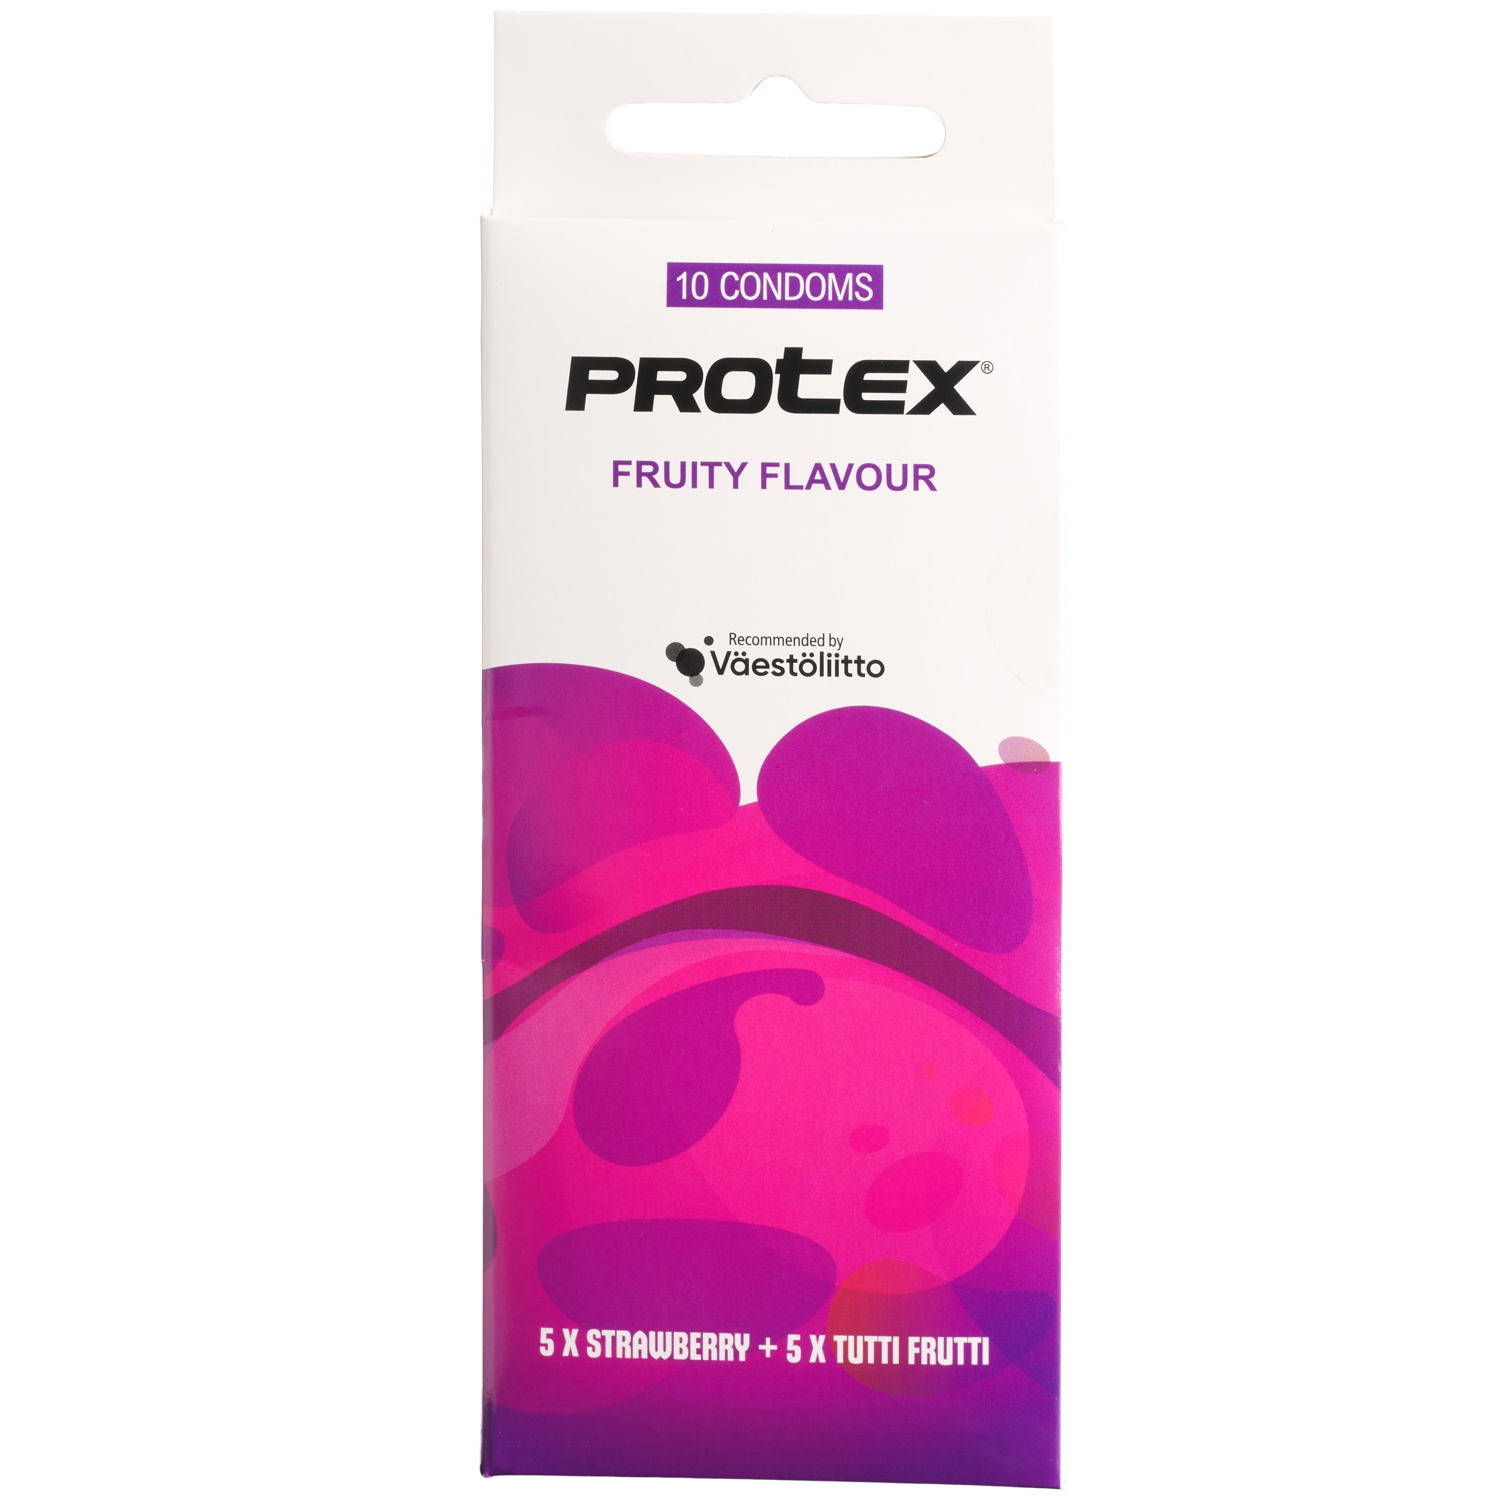 Protex Fruity Flavor Strawberry & Tutti Frutti Kondomer 10 st - Klar